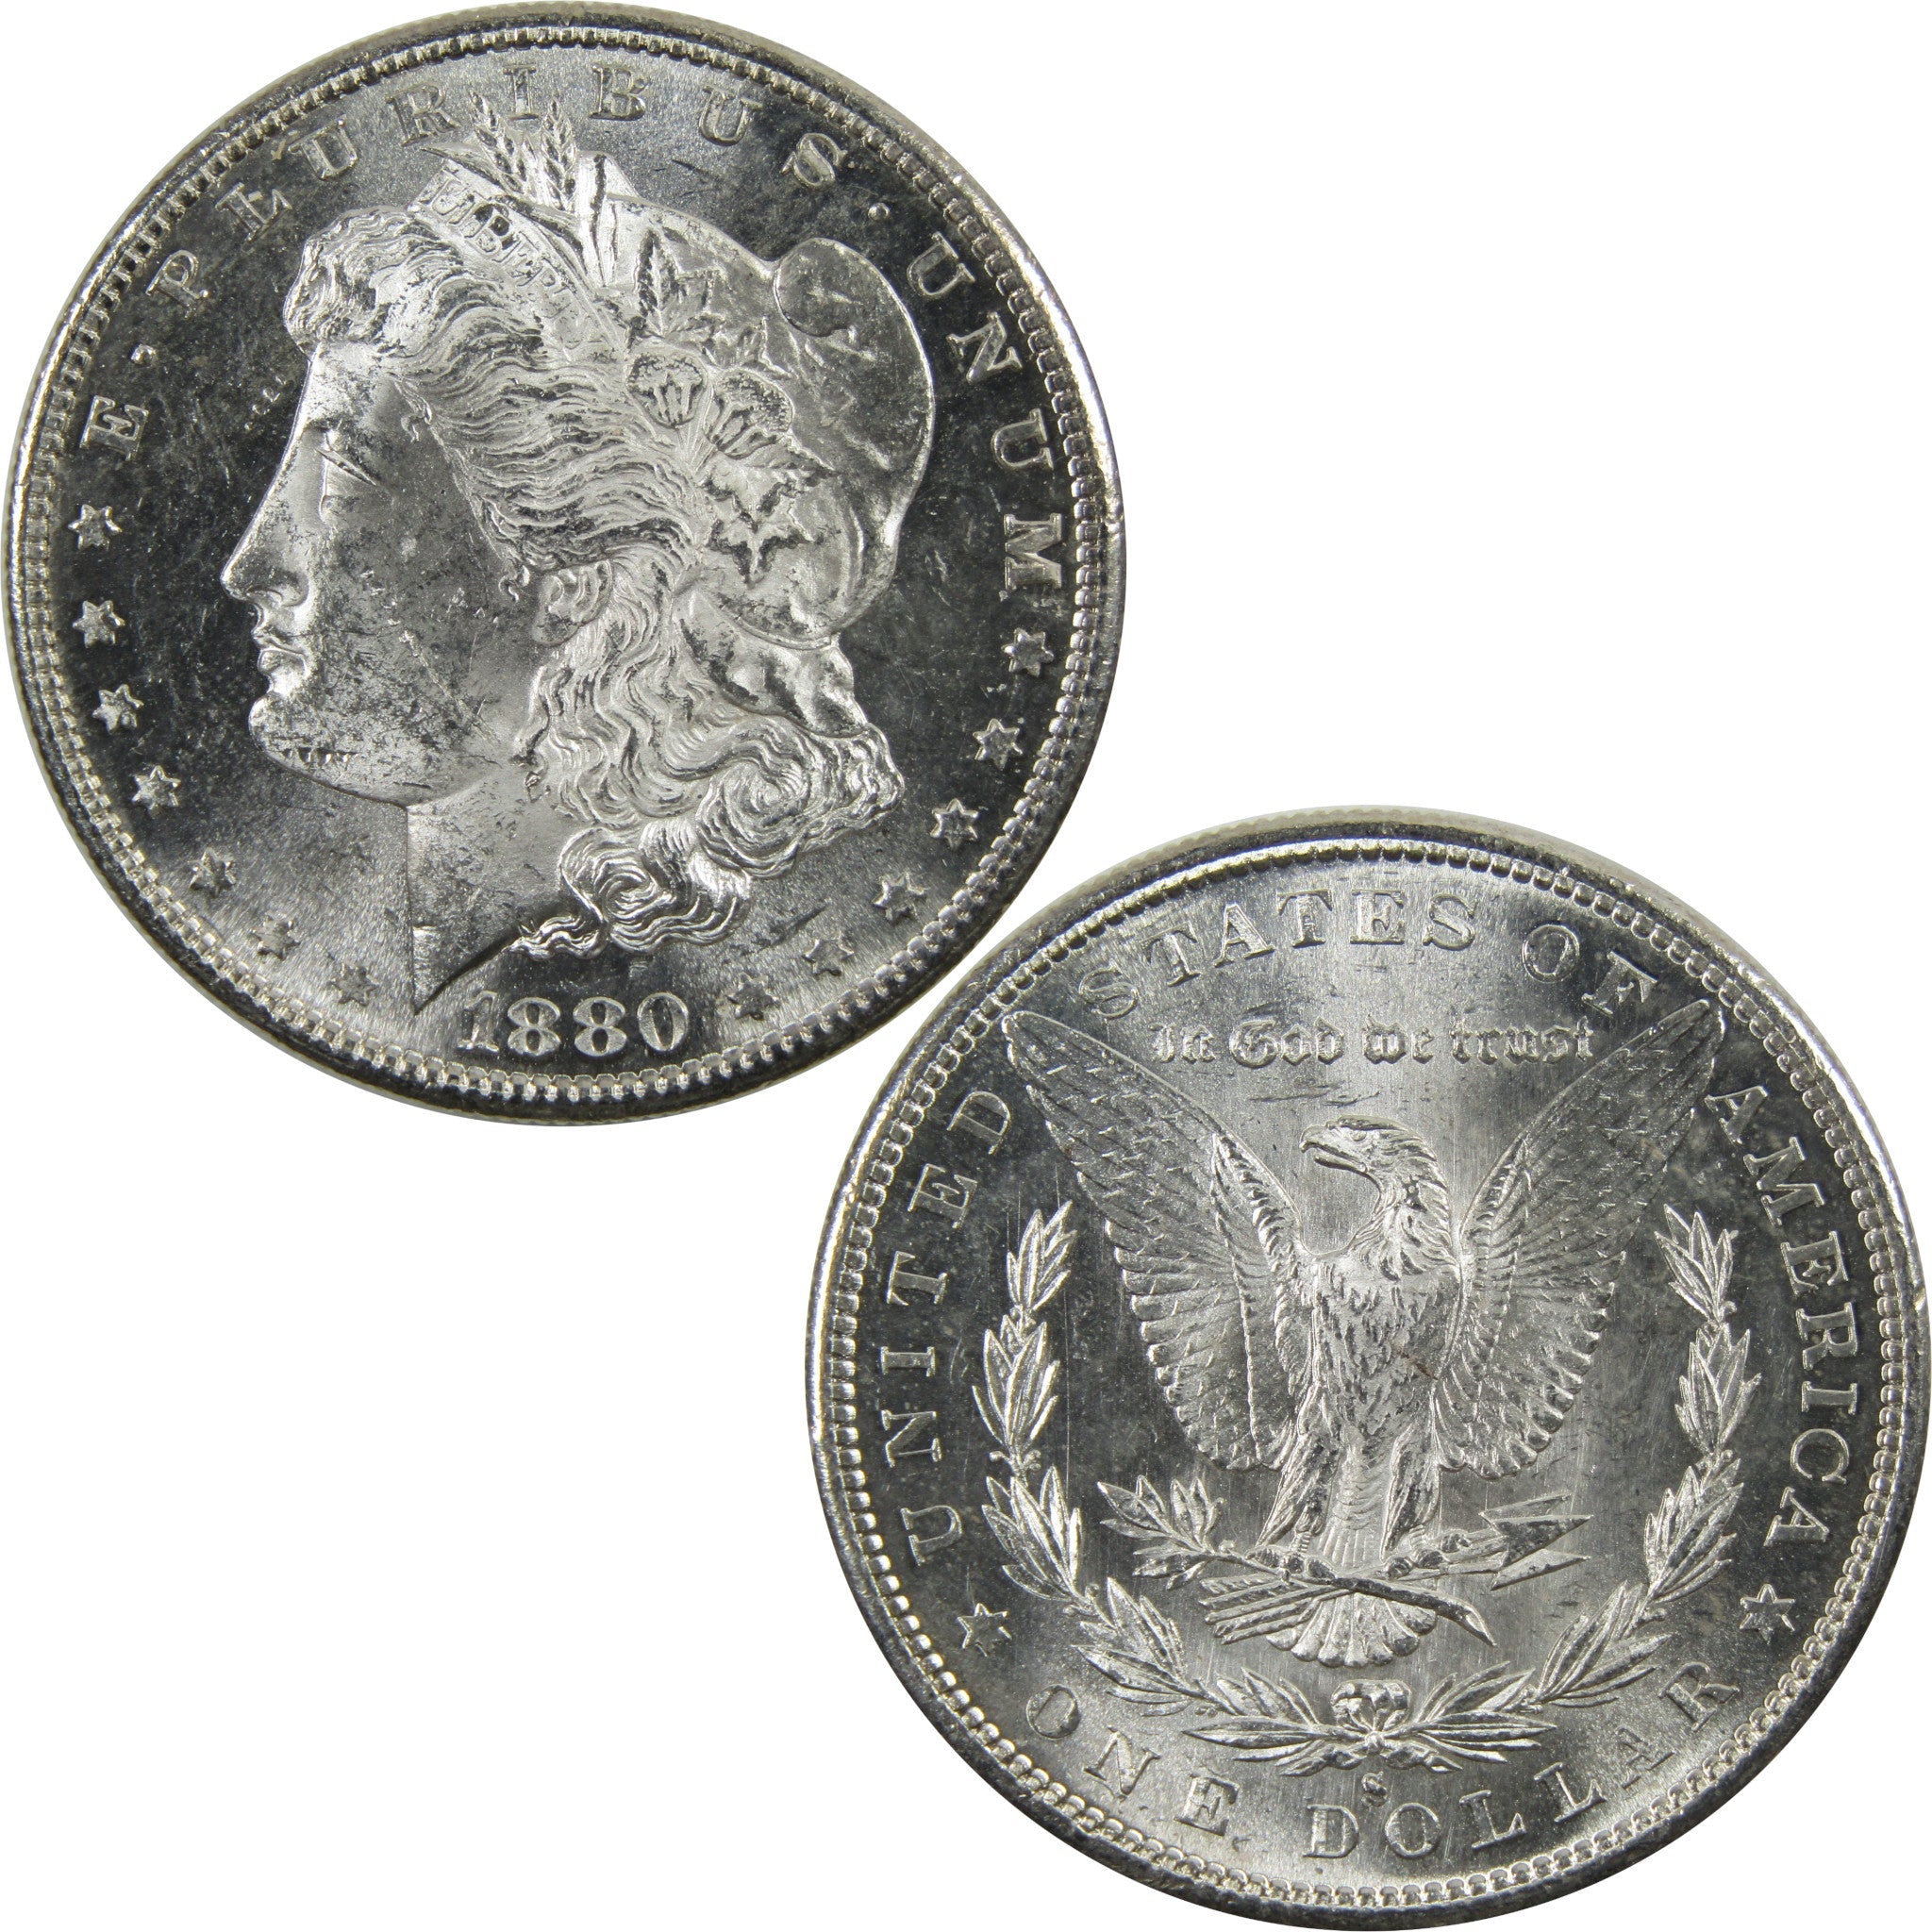 1880 S Morgan Dollar BU Uncirculated 90% Silver $1 Coin SKU:I5438 - Morgan coin - Morgan silver dollar - Morgan silver dollar for sale - Profile Coins &amp; Collectibles